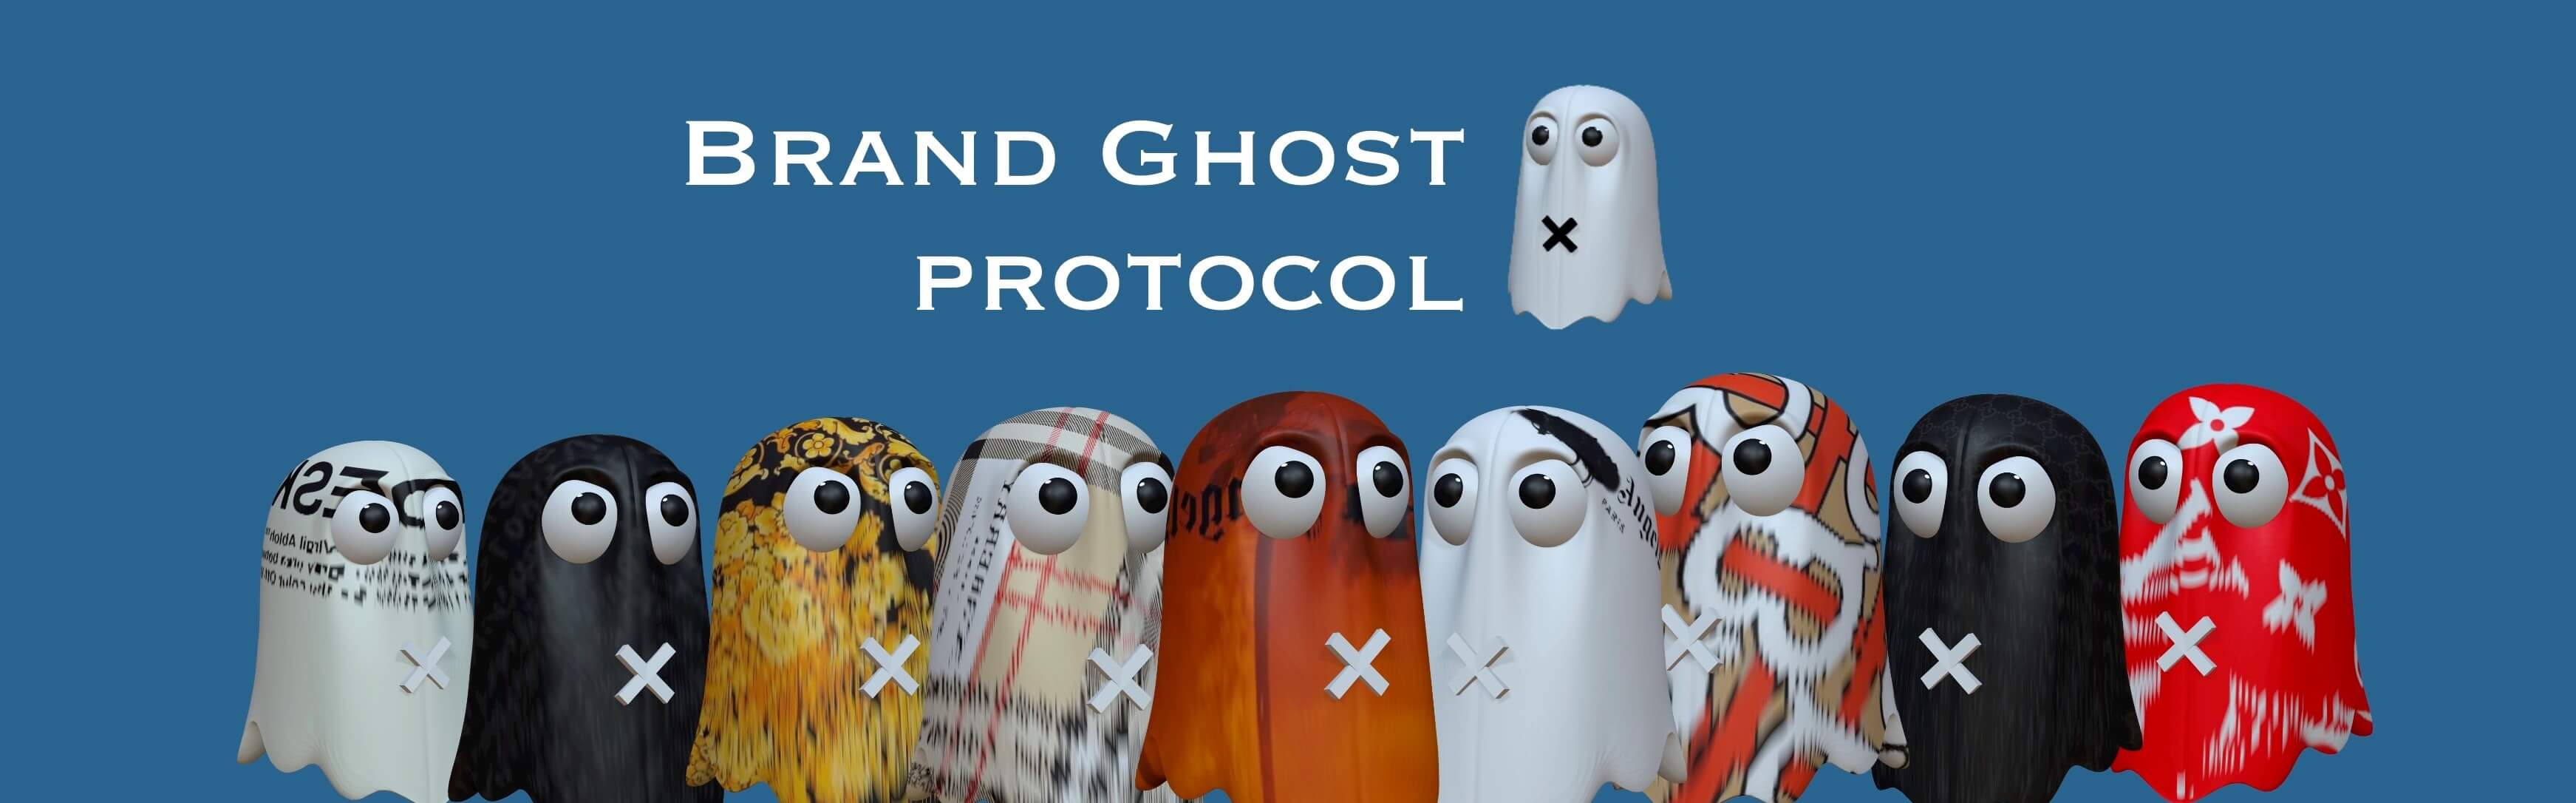 Brand ghost protoco